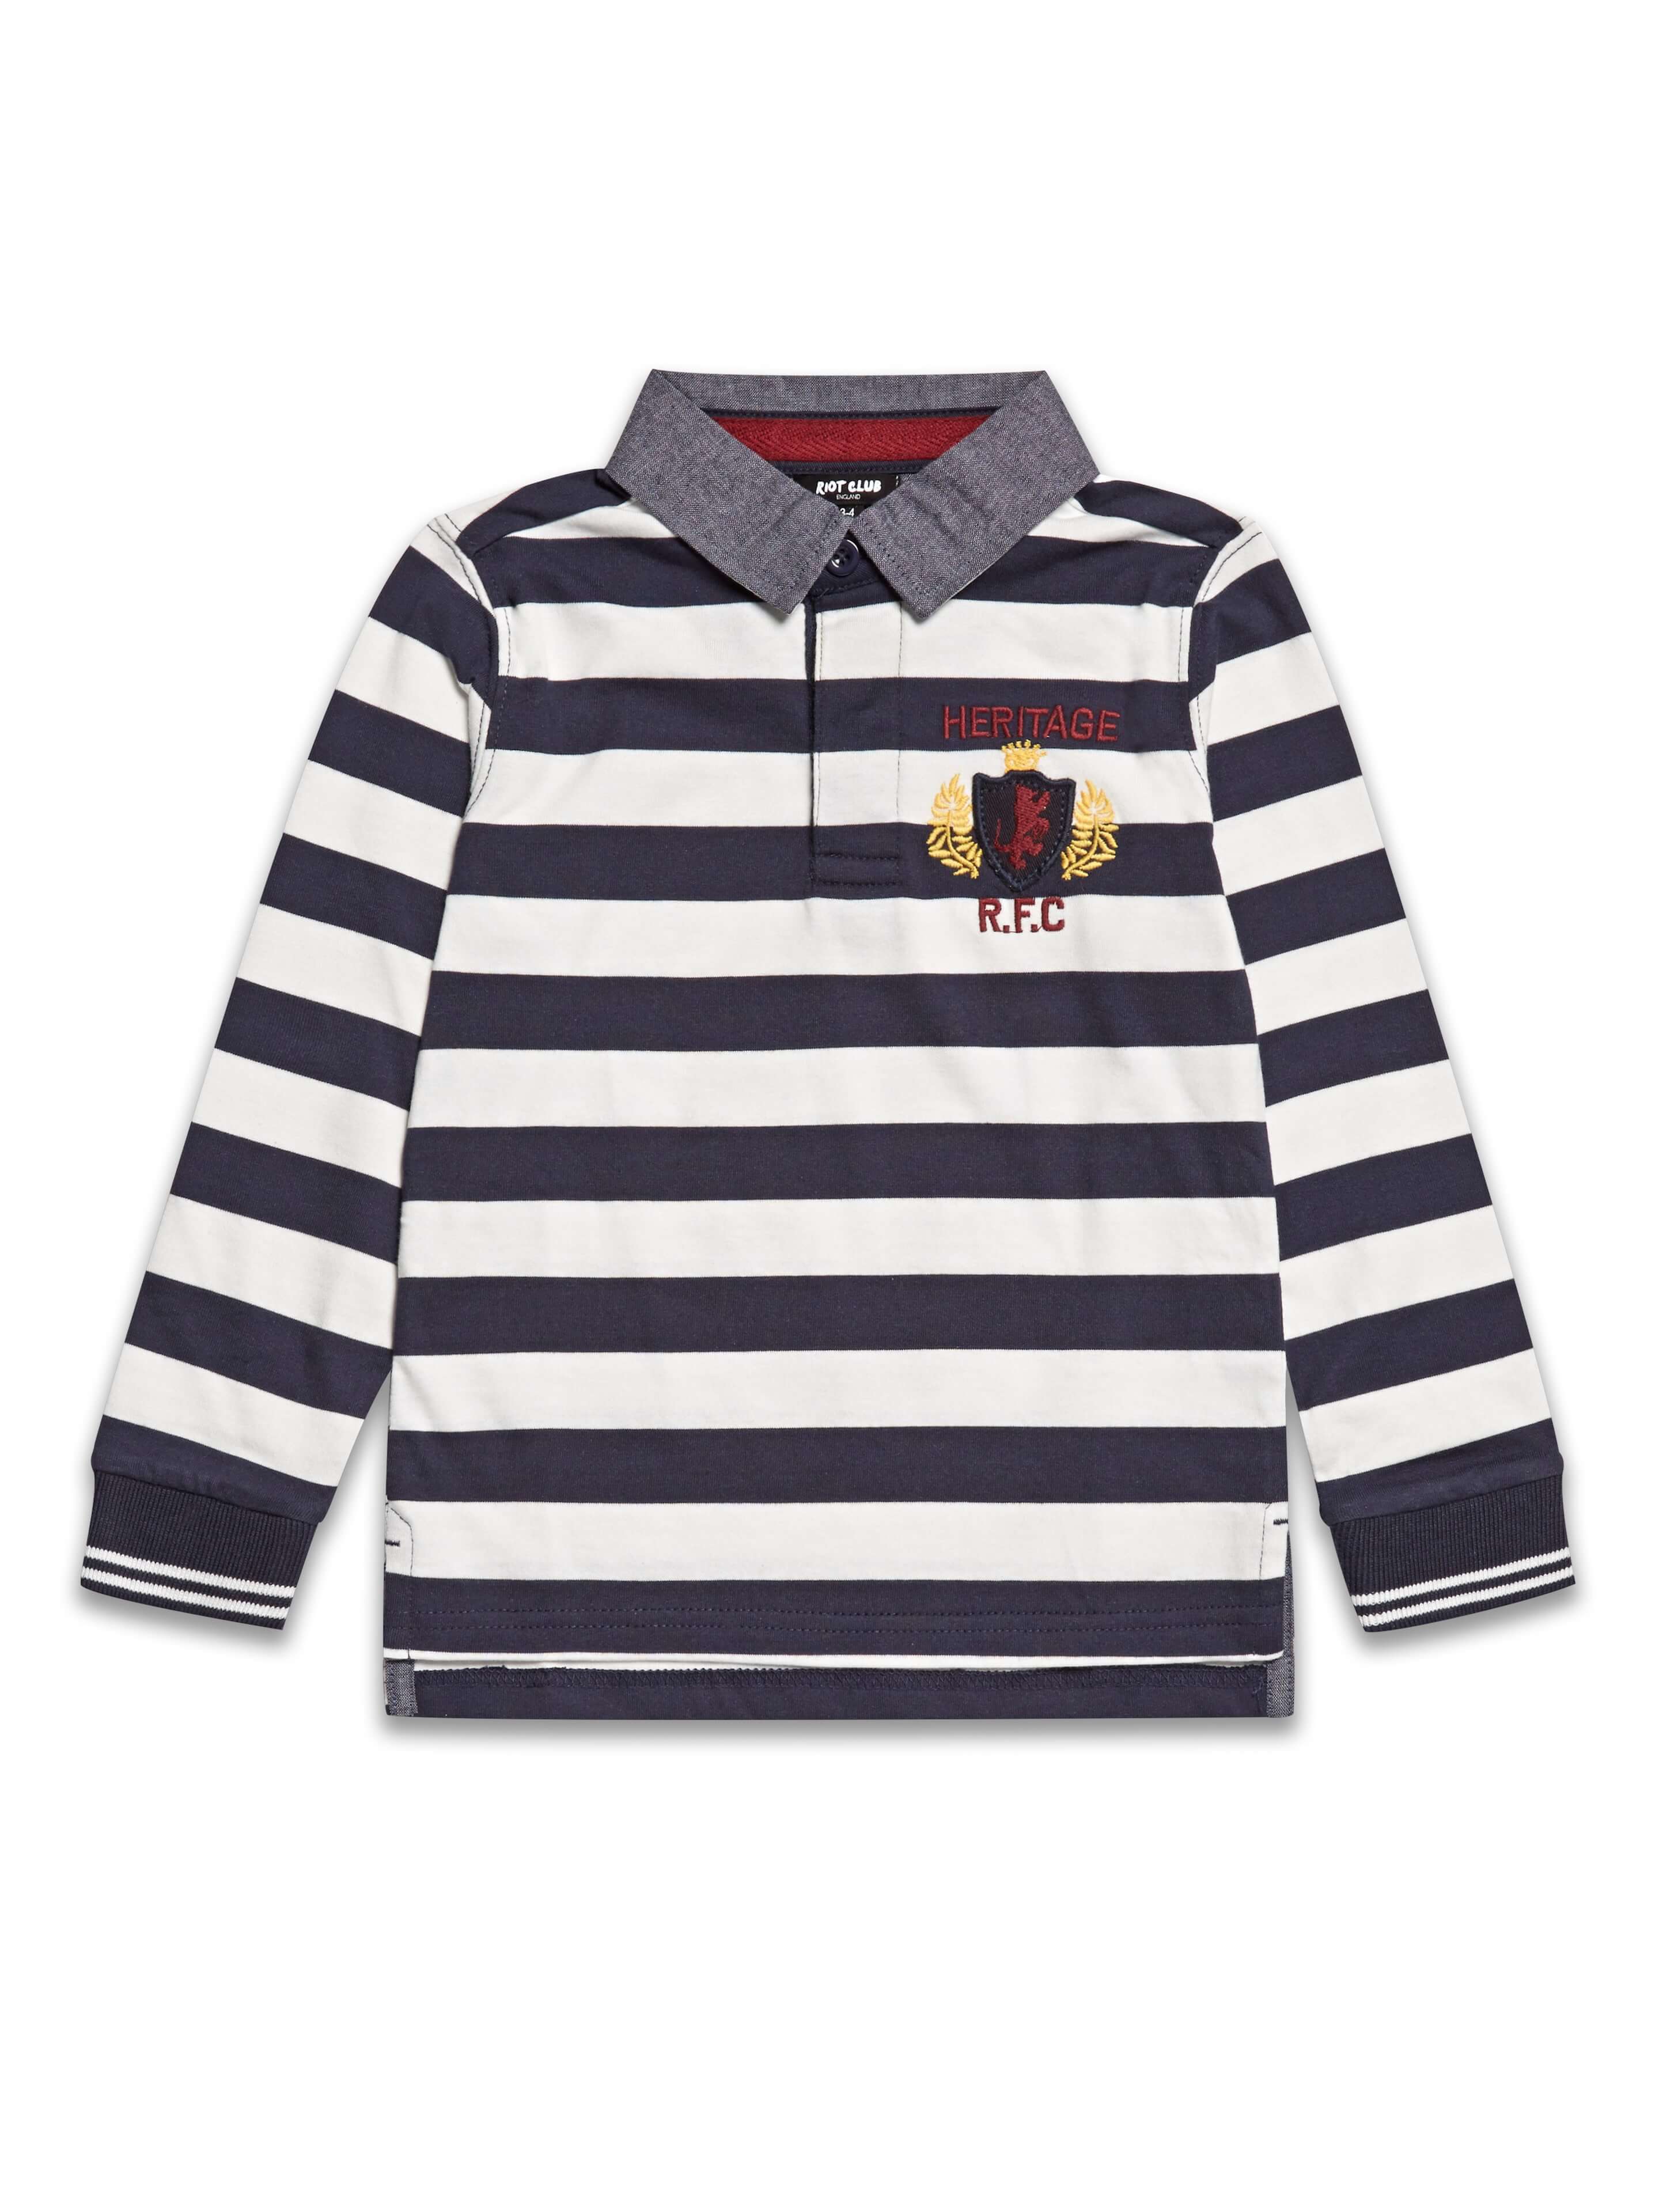 Boys Boutique Blue & White Stripe Rugby Shirt Baby Boutique Shop